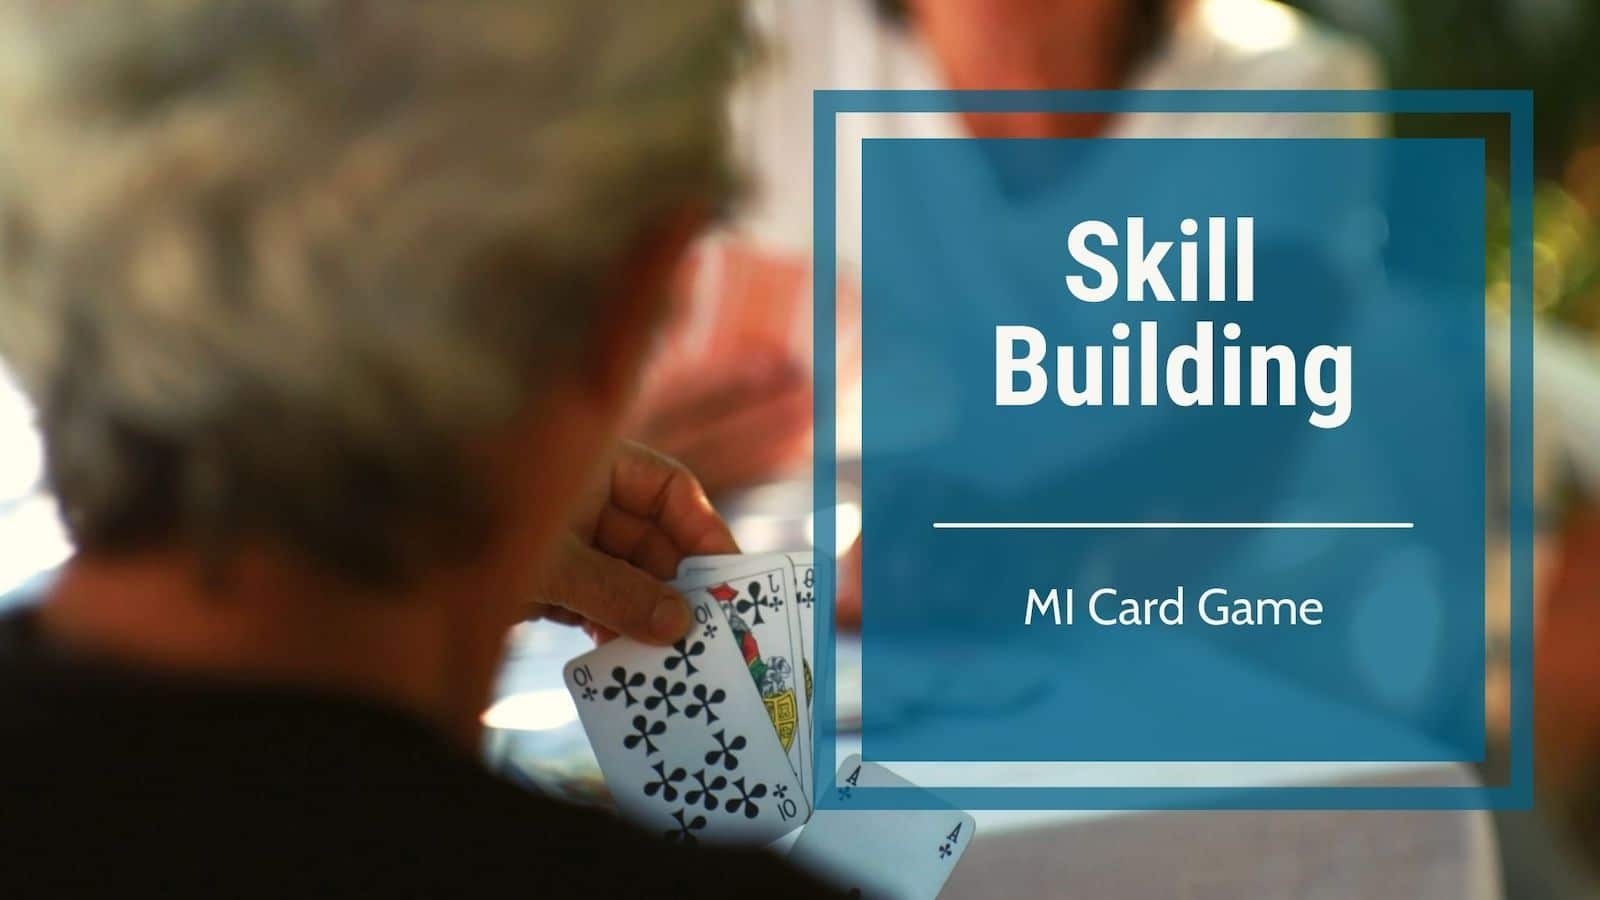 Video Skill building: The MI Game